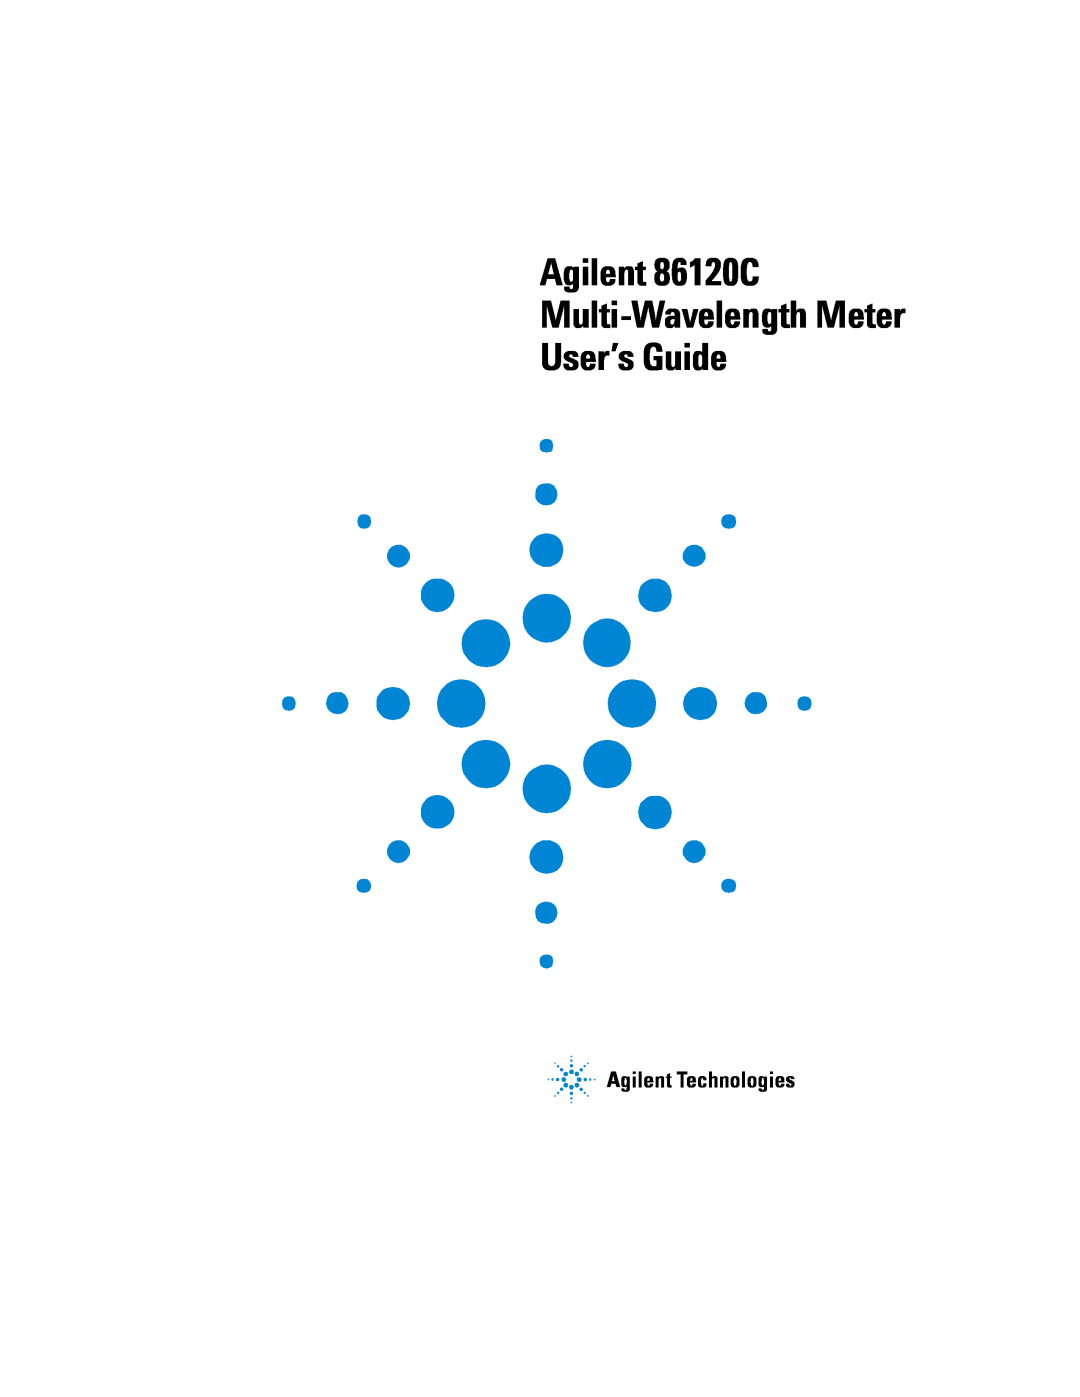 Agilent Technologies manual Agilent 86120C Multi-Wavelength Meter User’s Guide 